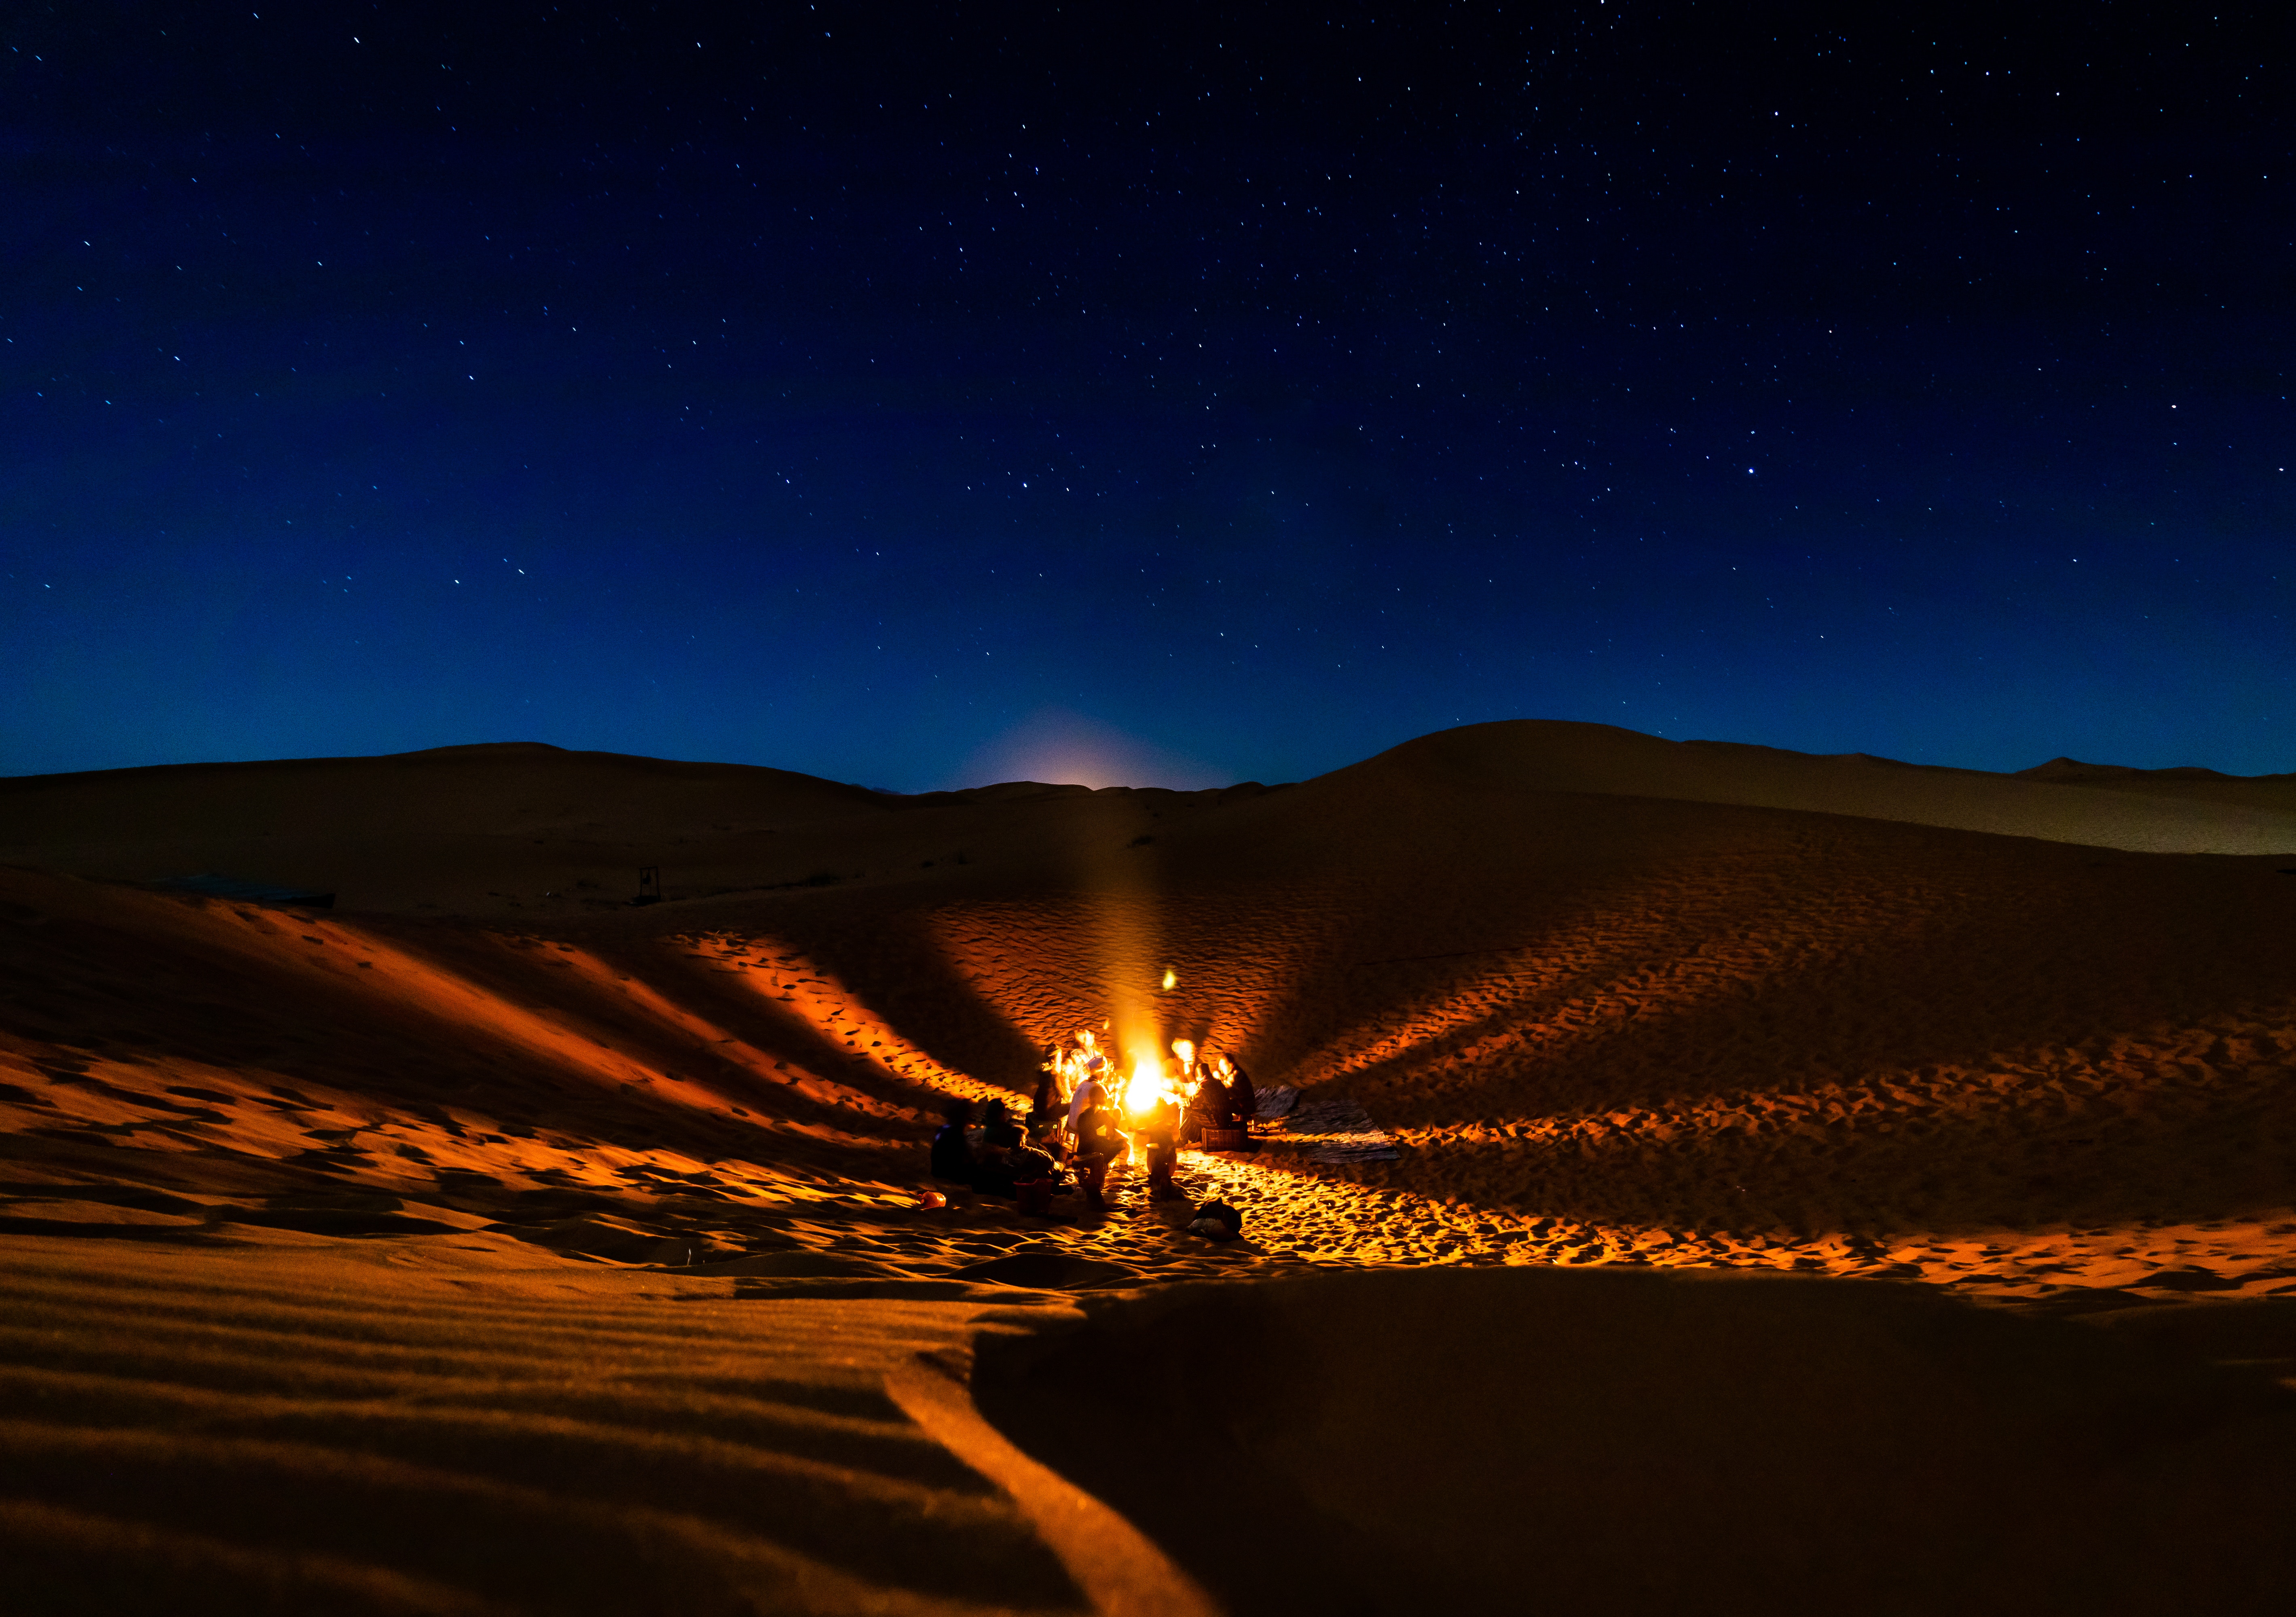 morocco, people, nature, bonfire, night, desert, starry sky, camping, campsite